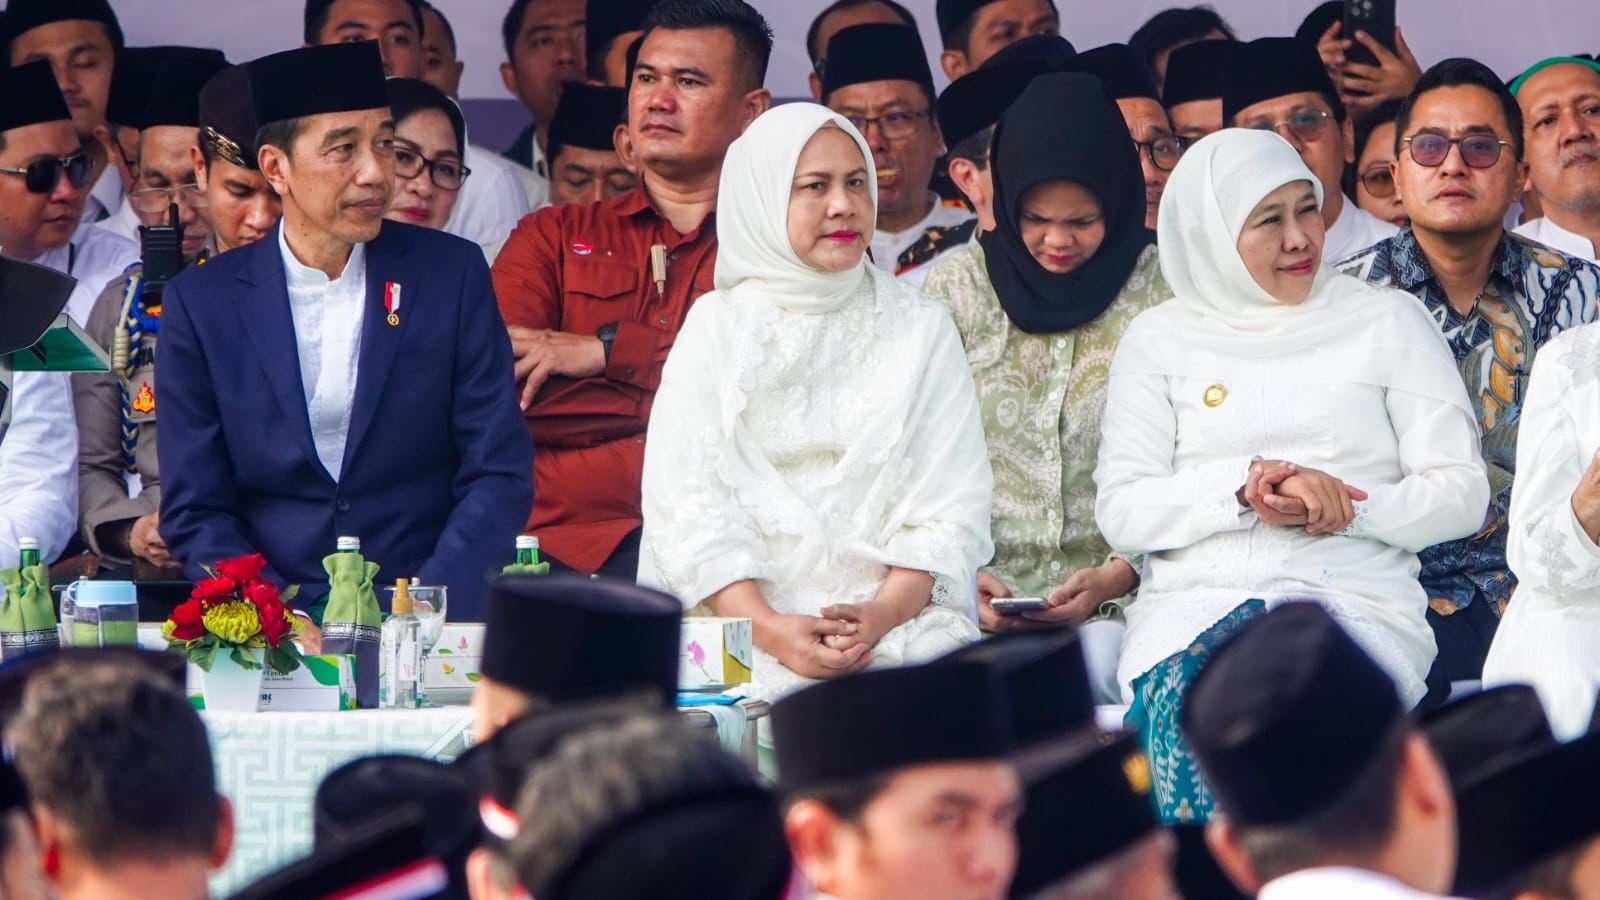 Khofifah Indar Parawansa Gubernur Jatim (kanan) waktu menghadiri apel Hari Santri bersama Iriana Jokowi Ibu Negara (tengah) dan Joko Widodo Presiden (kiri) di Monumen Tugu Pahlawan, Surabaya, Minggu (22/10/2023). Foto: Humas Pemprov Jatim.